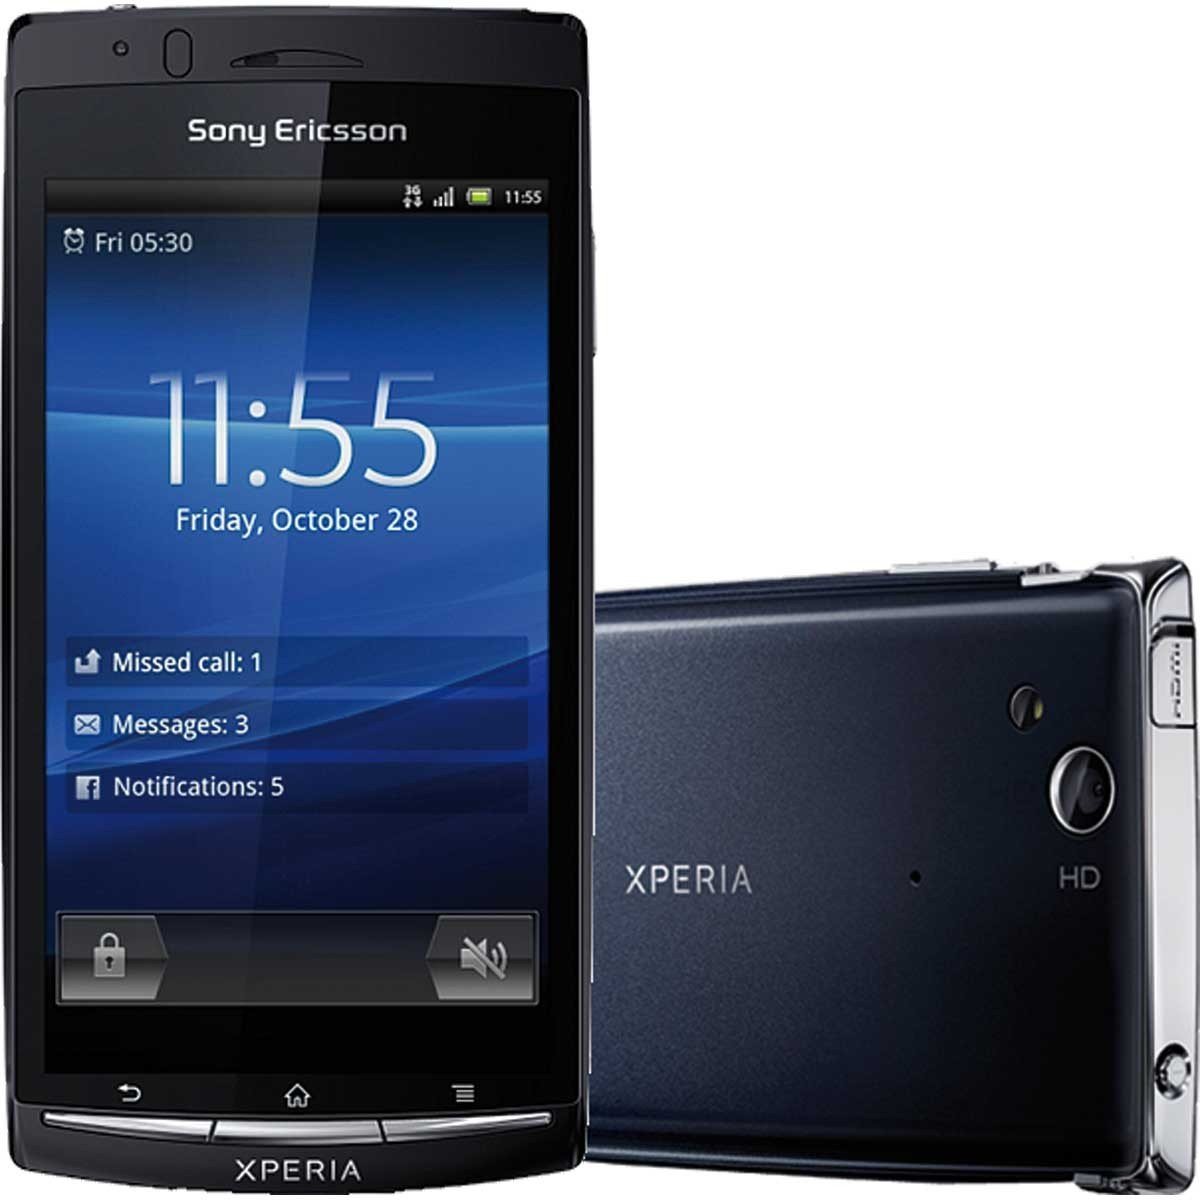 Sony Ericsson Xperia Arc ¿Con Android 2.4?